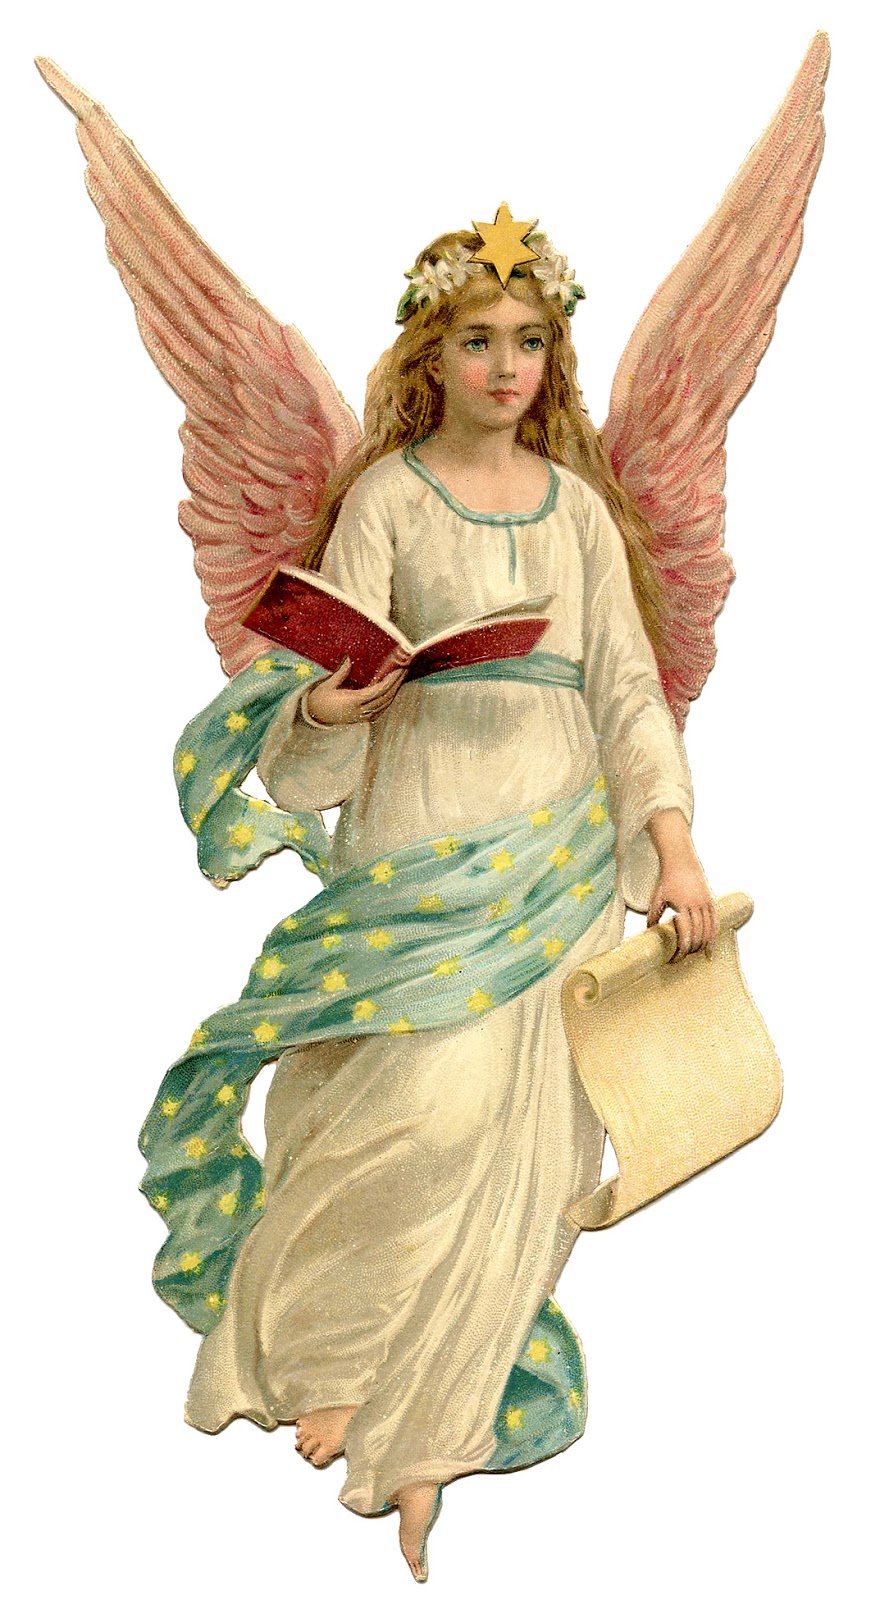 Vintage Christmas Image   Beautiful Angel   The Graphics Fairy